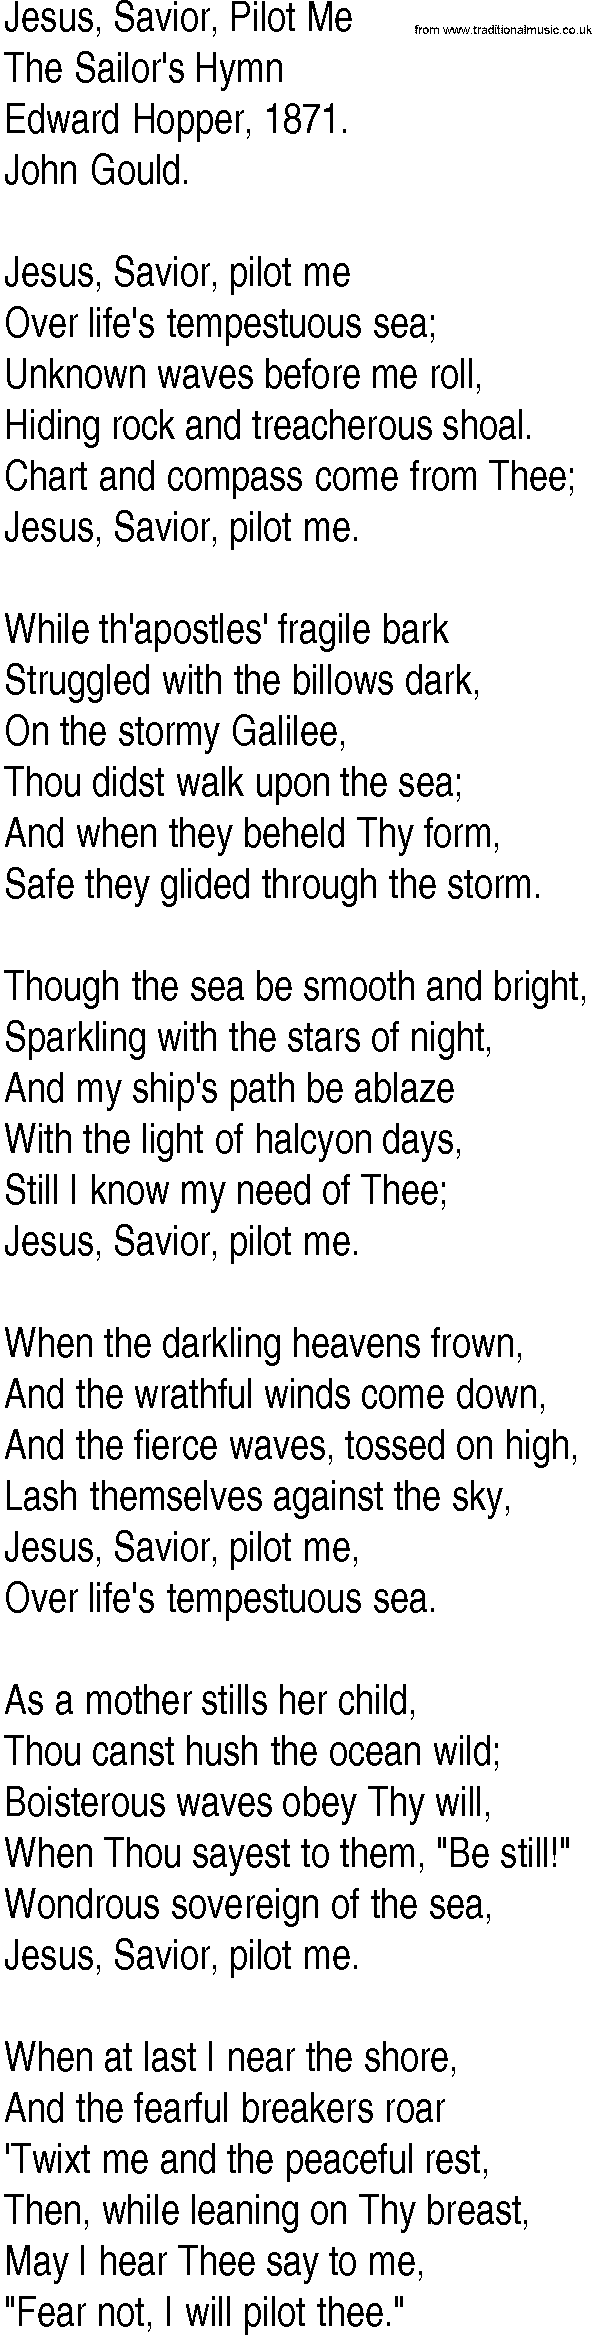 Hymn and Gospel Song: Jesus, Savior, Pilot Me by Edward Hopper lyrics